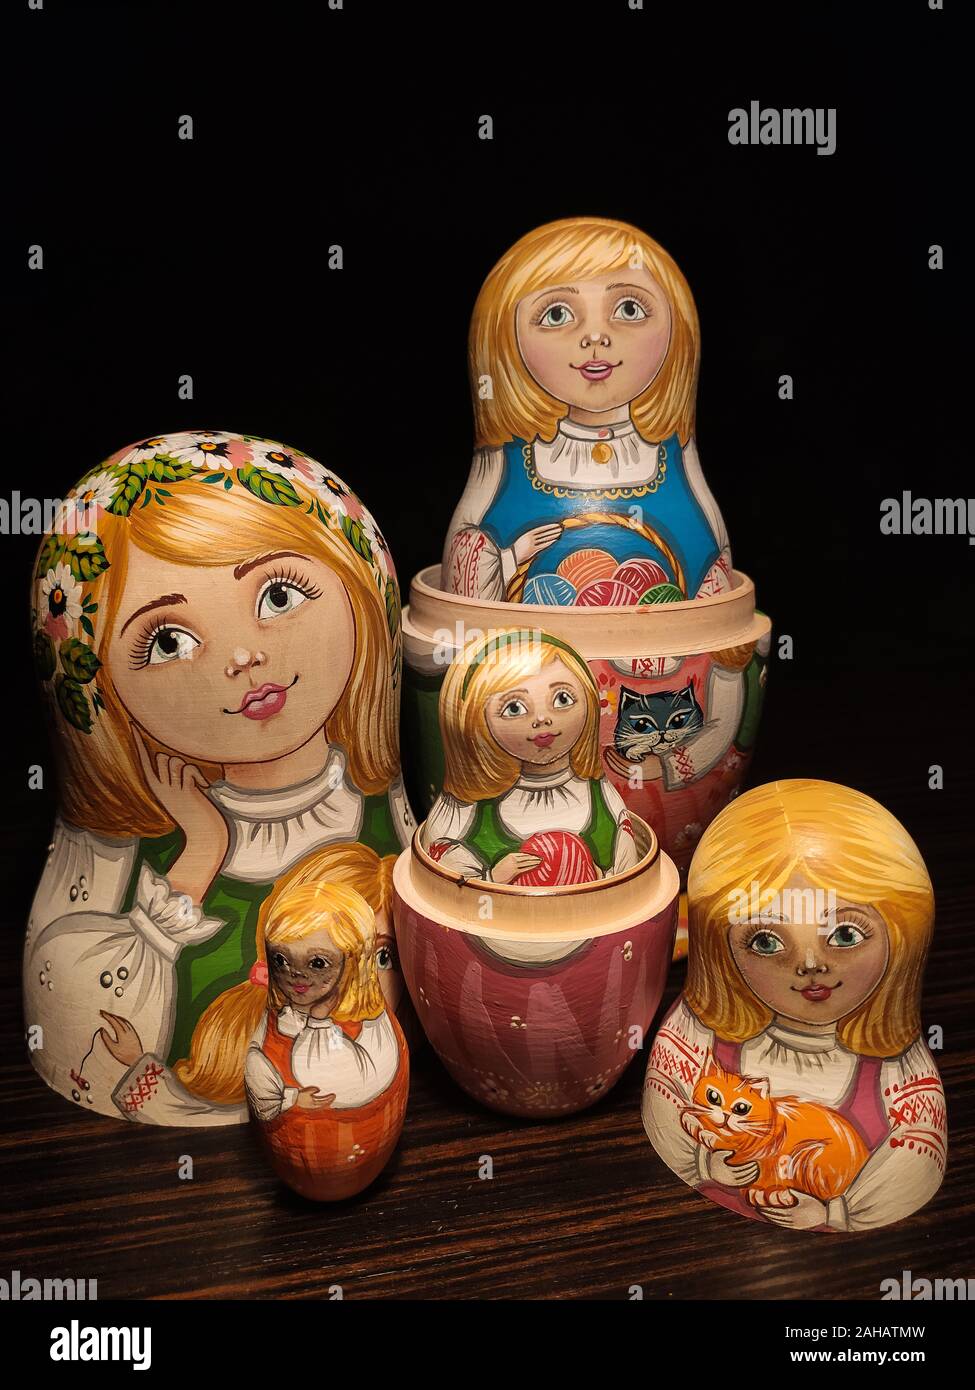 Matryoshka doll, Russian doll, Russian nesting doll, stacking dolls, wooden dolls. Stock Photo